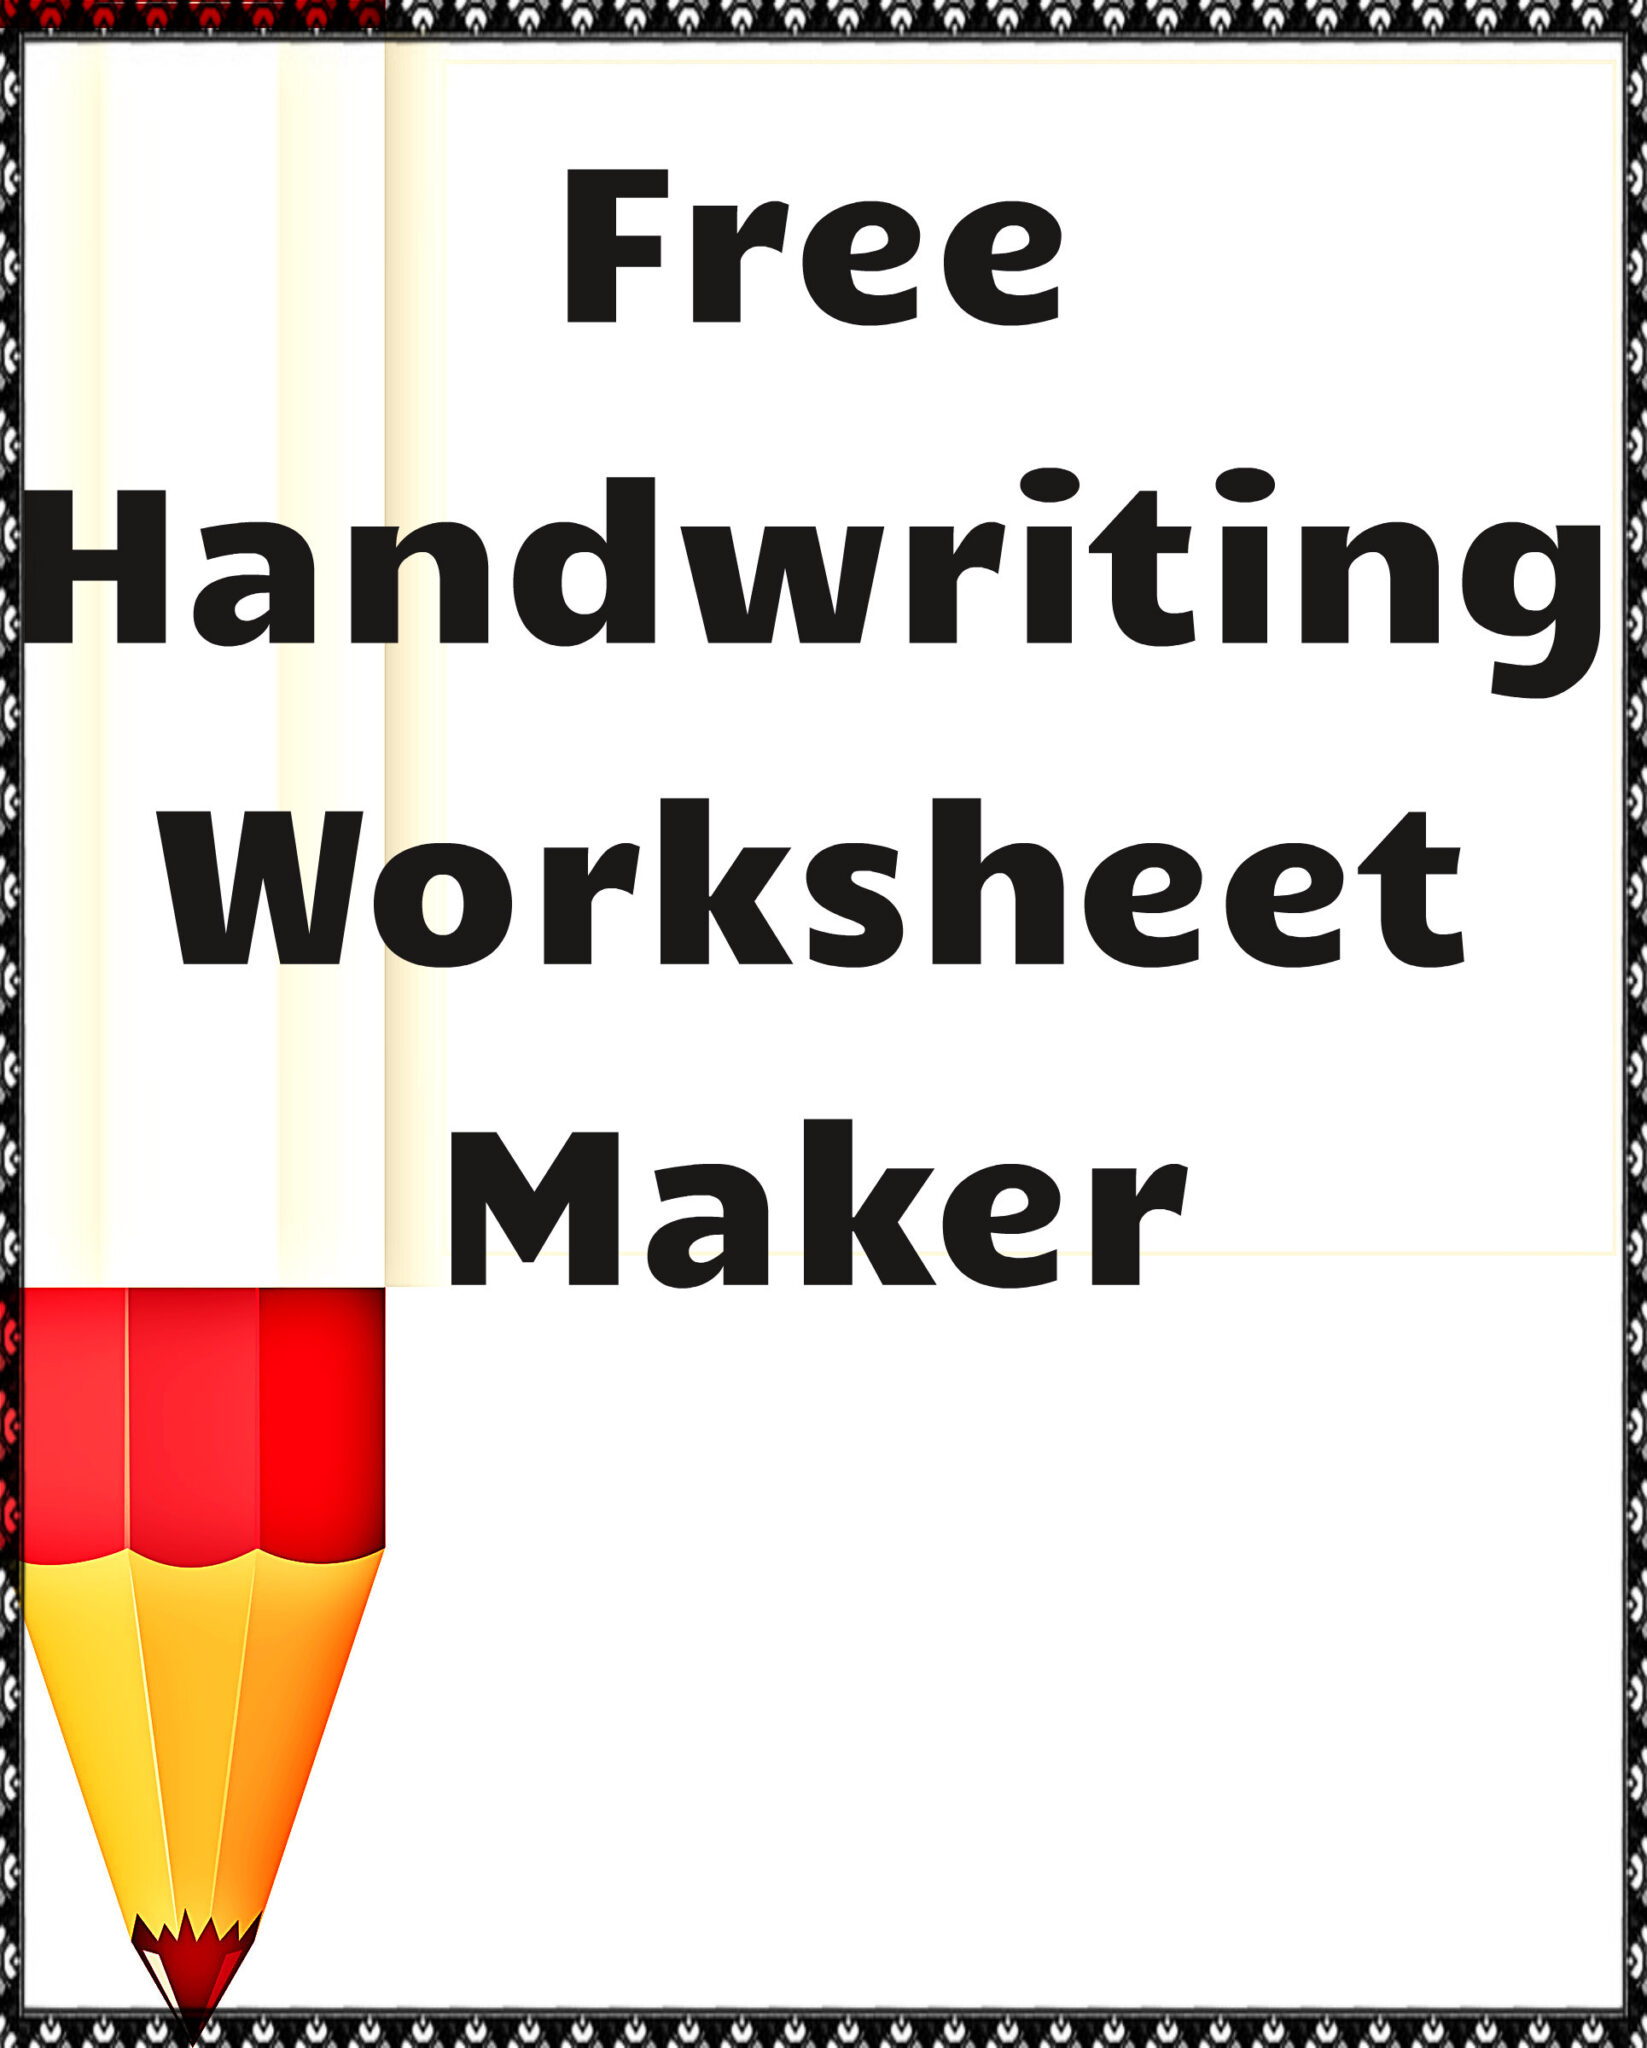 handwriting-worksheet-maker-free-classroom-tools-alphabetworksheetsfree